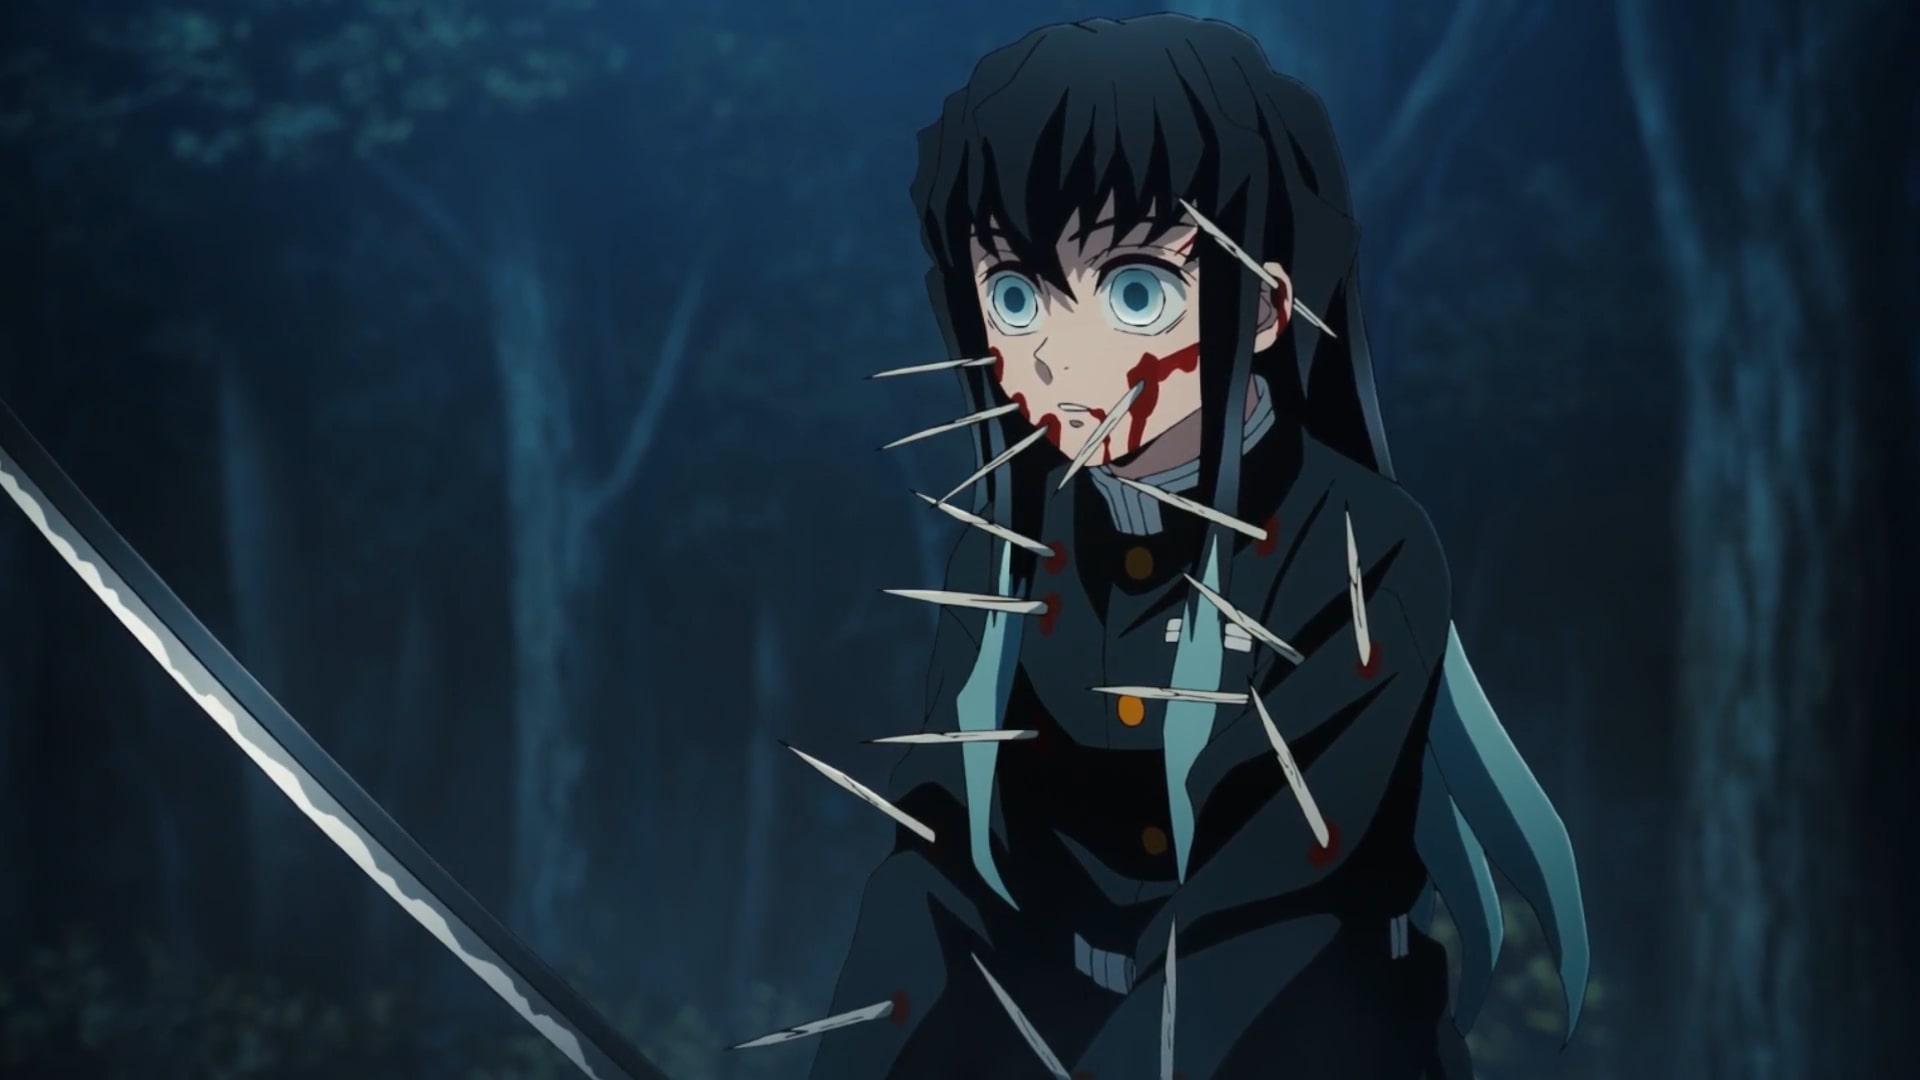 Demon Slayer: Swordsmith Village (Season 3) Episode 5 Preview Revealed -  Anime Corner